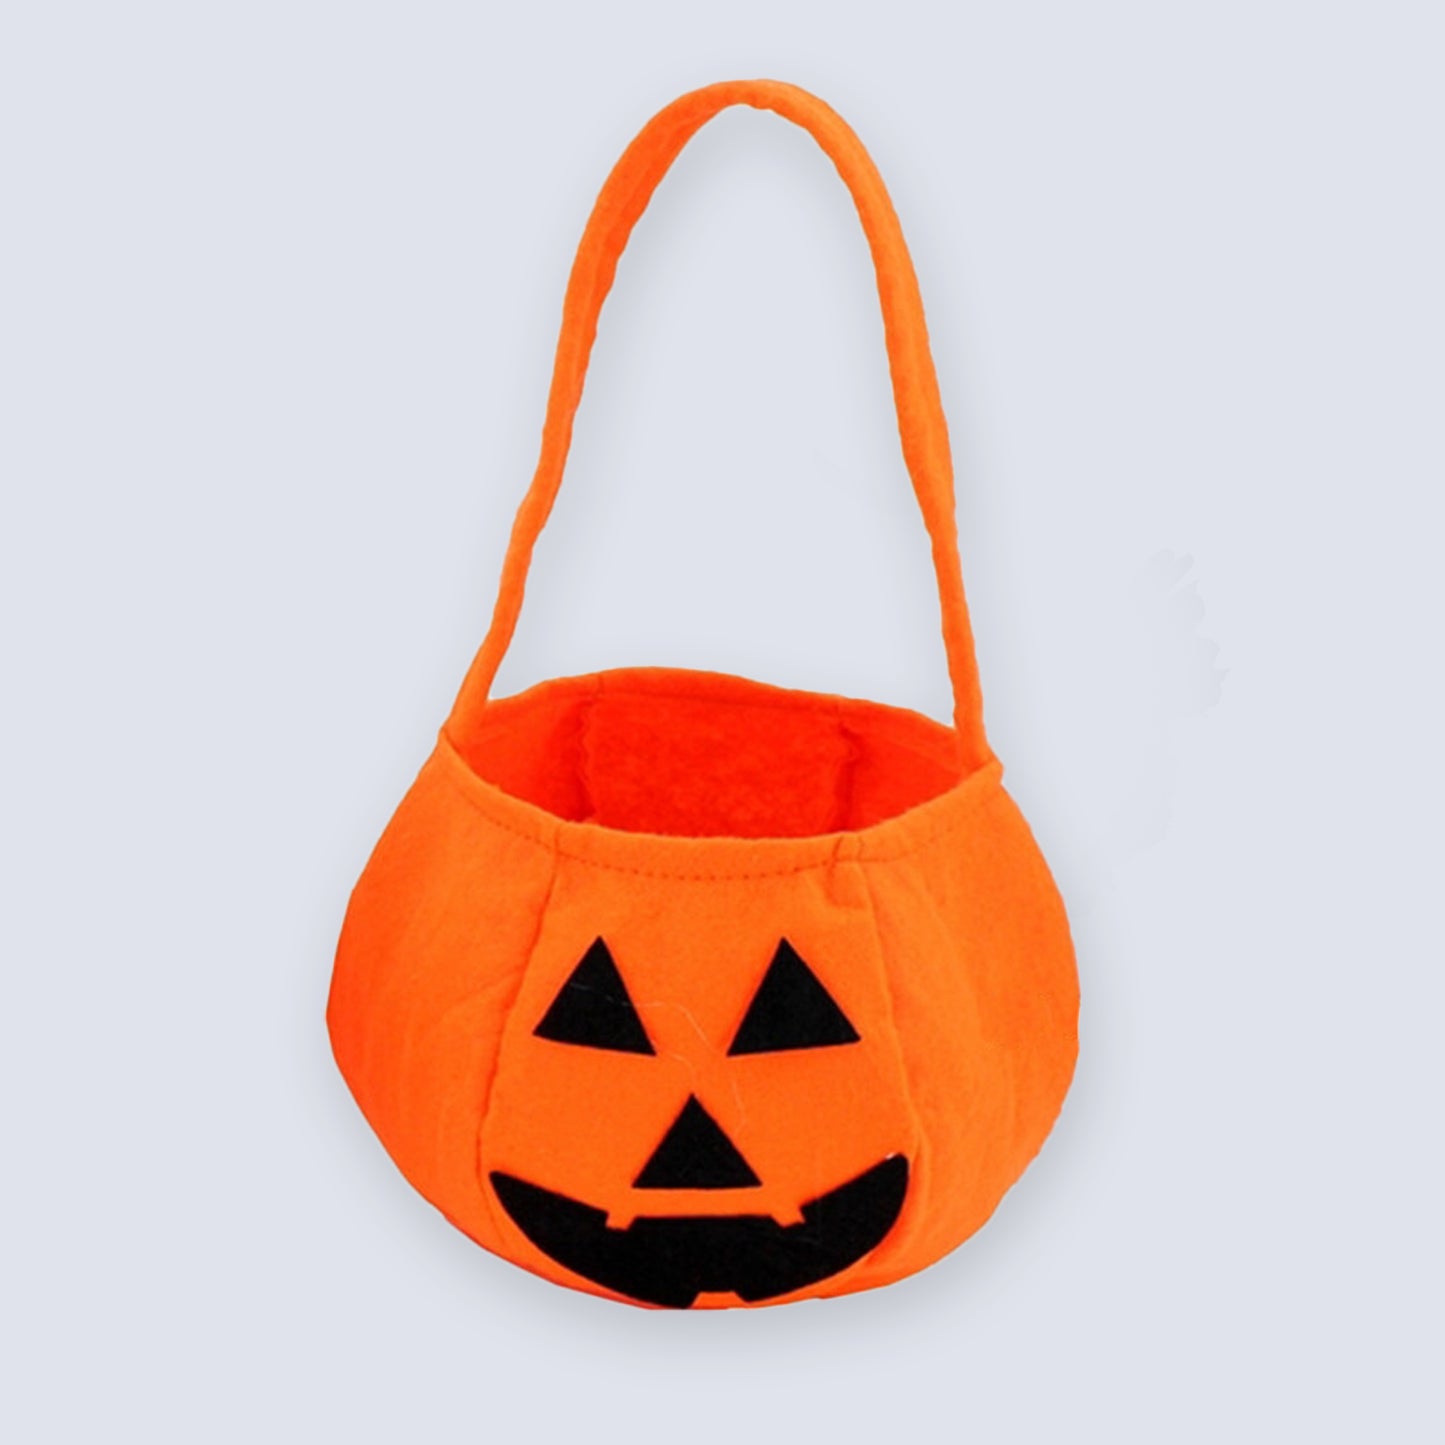 Small Halloween Trick or Treat Orange Pumpkin Bag Sack